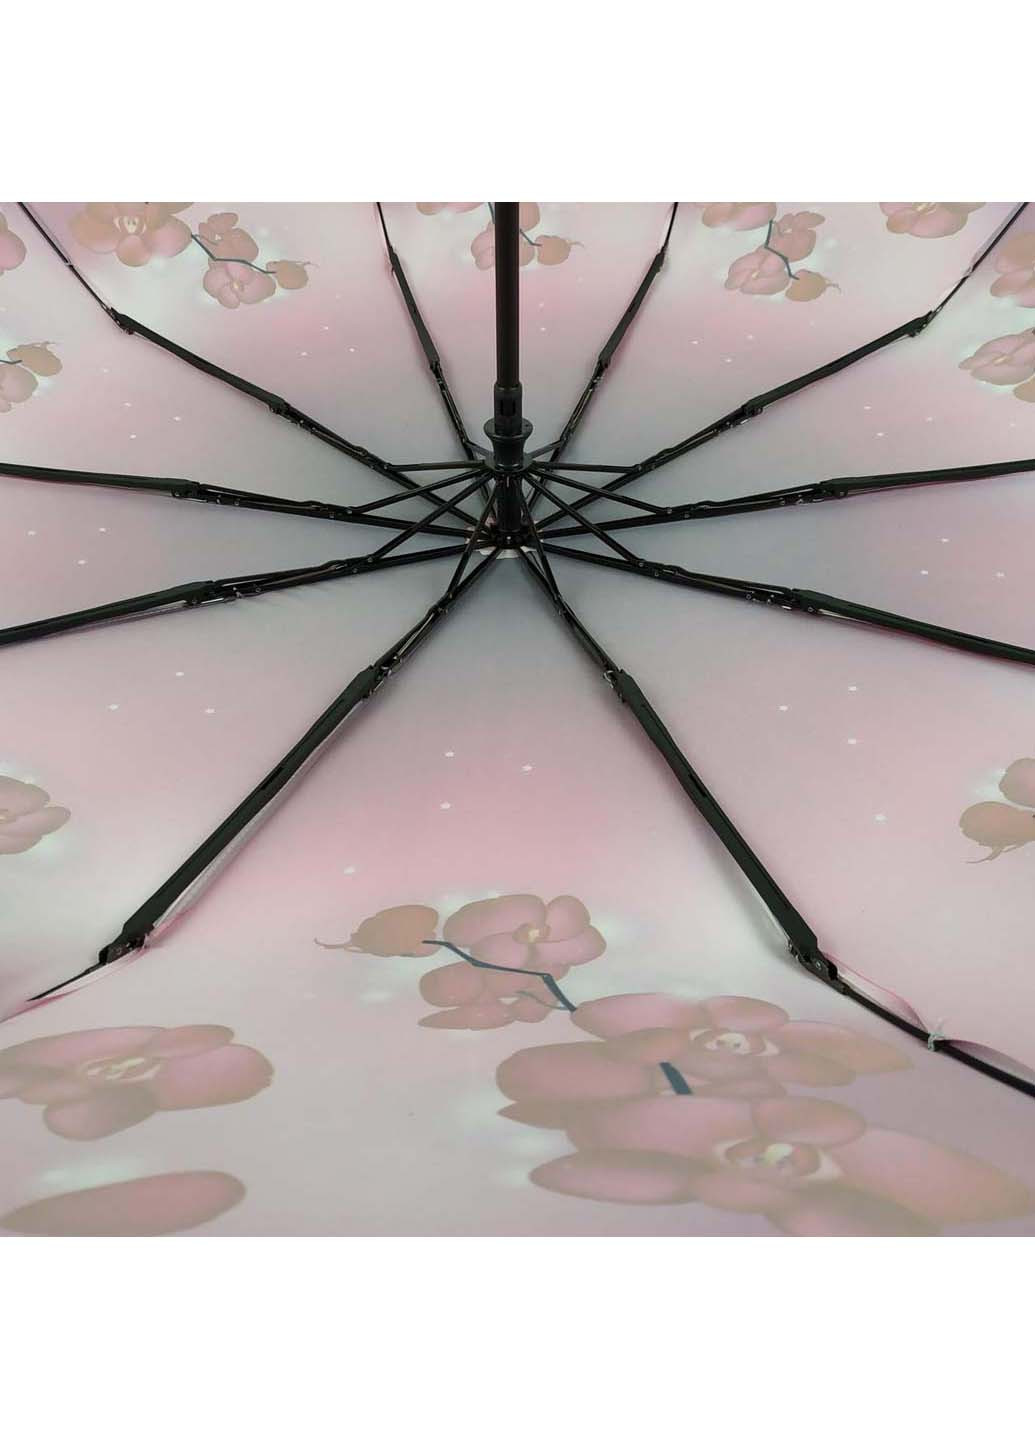 Автоматична парасолька Flagman (254793582)